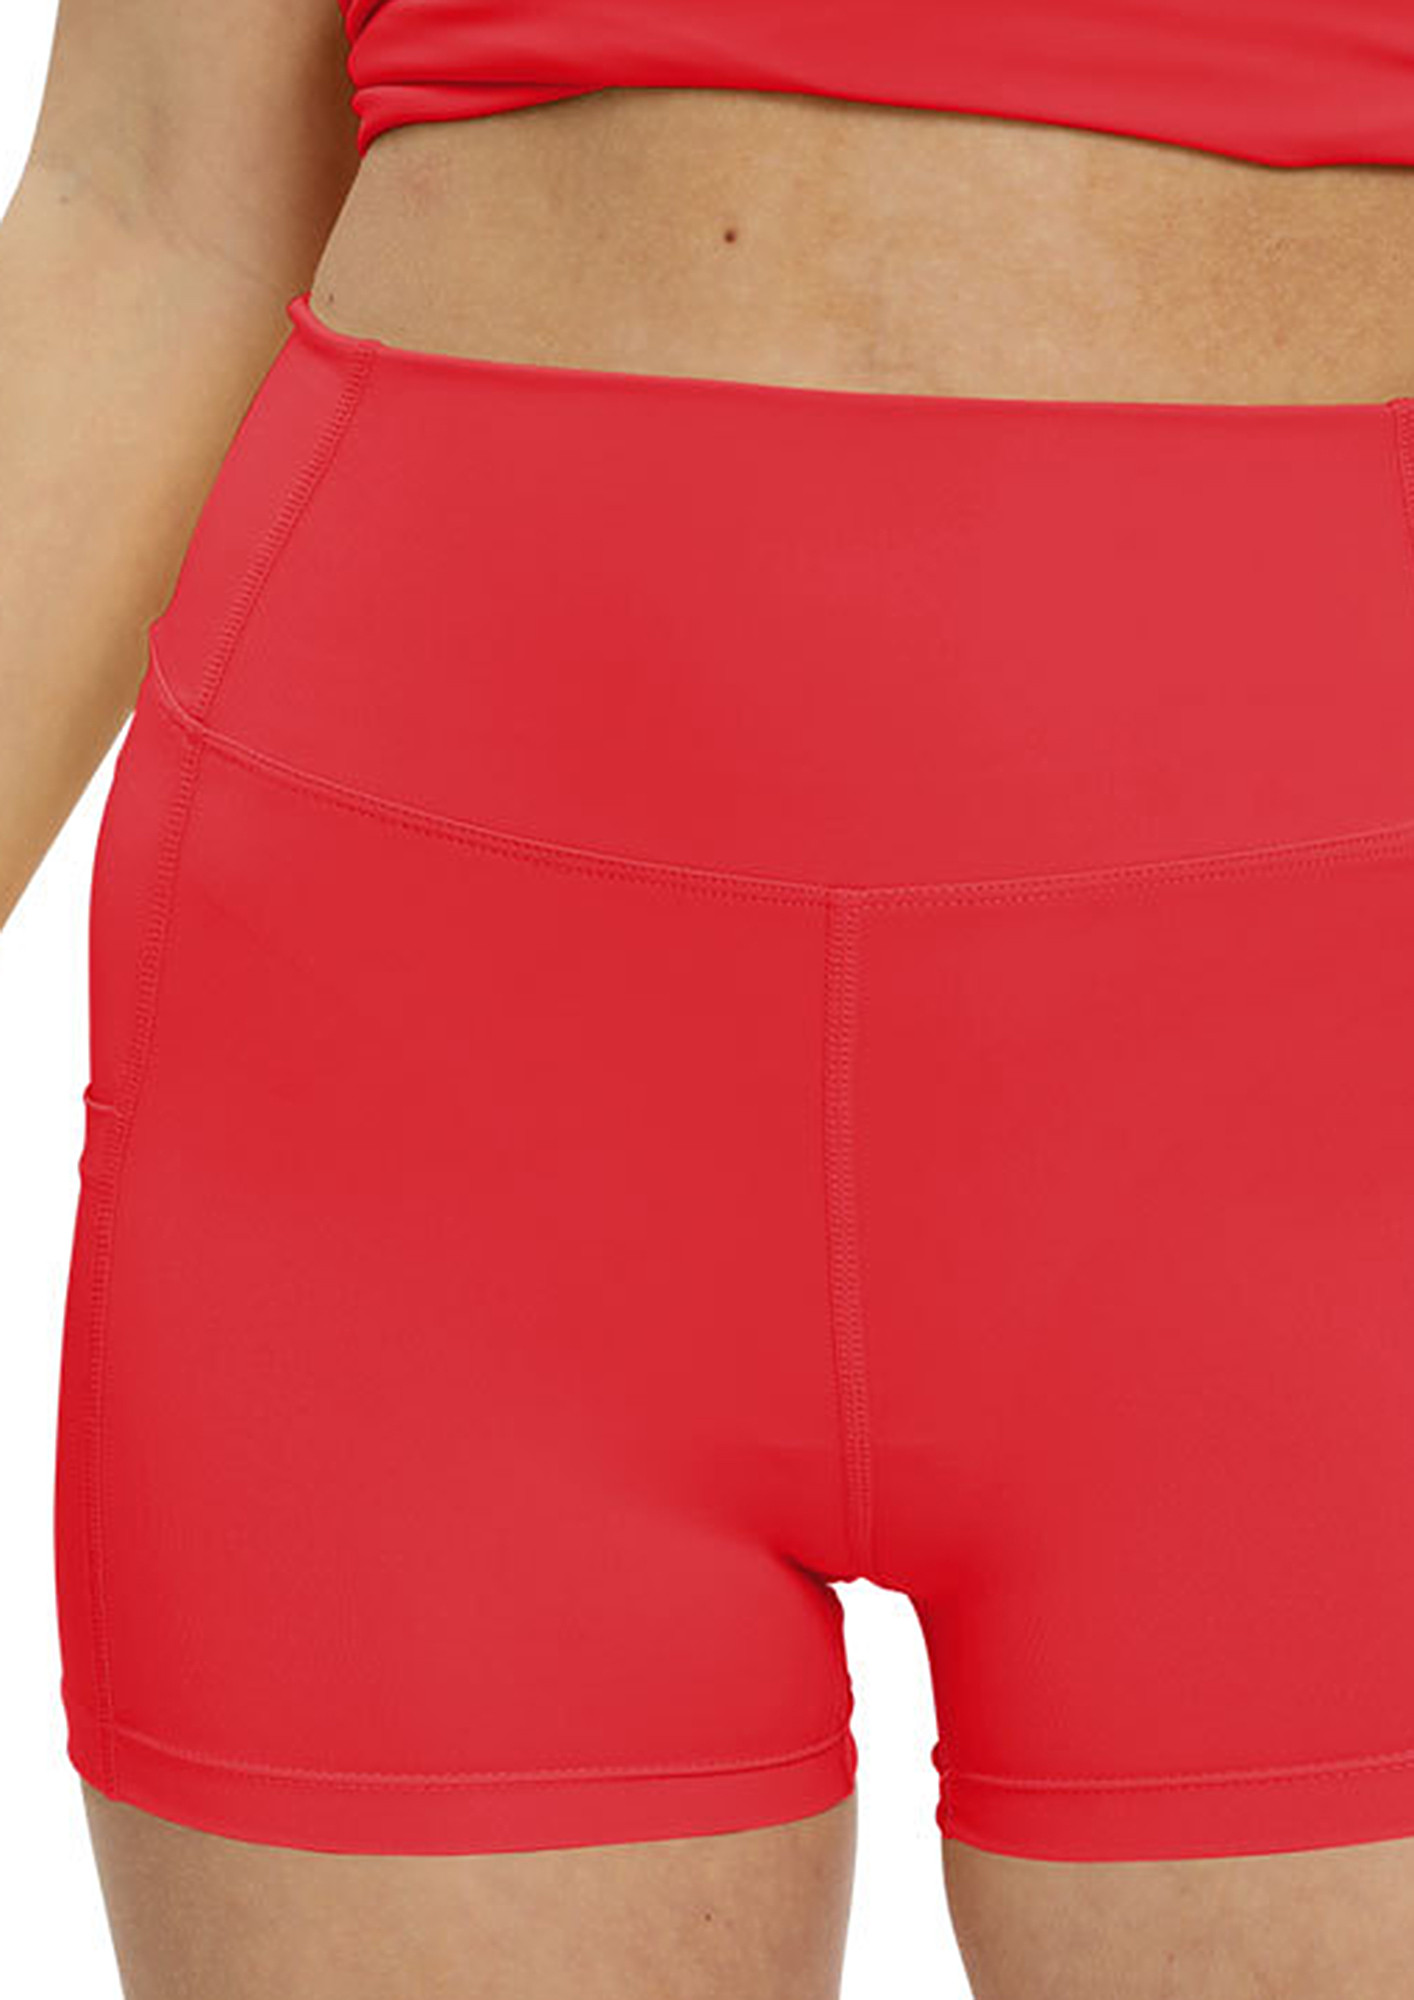 Yoga Women Shorts - Buy Yoga Women Shorts online in India